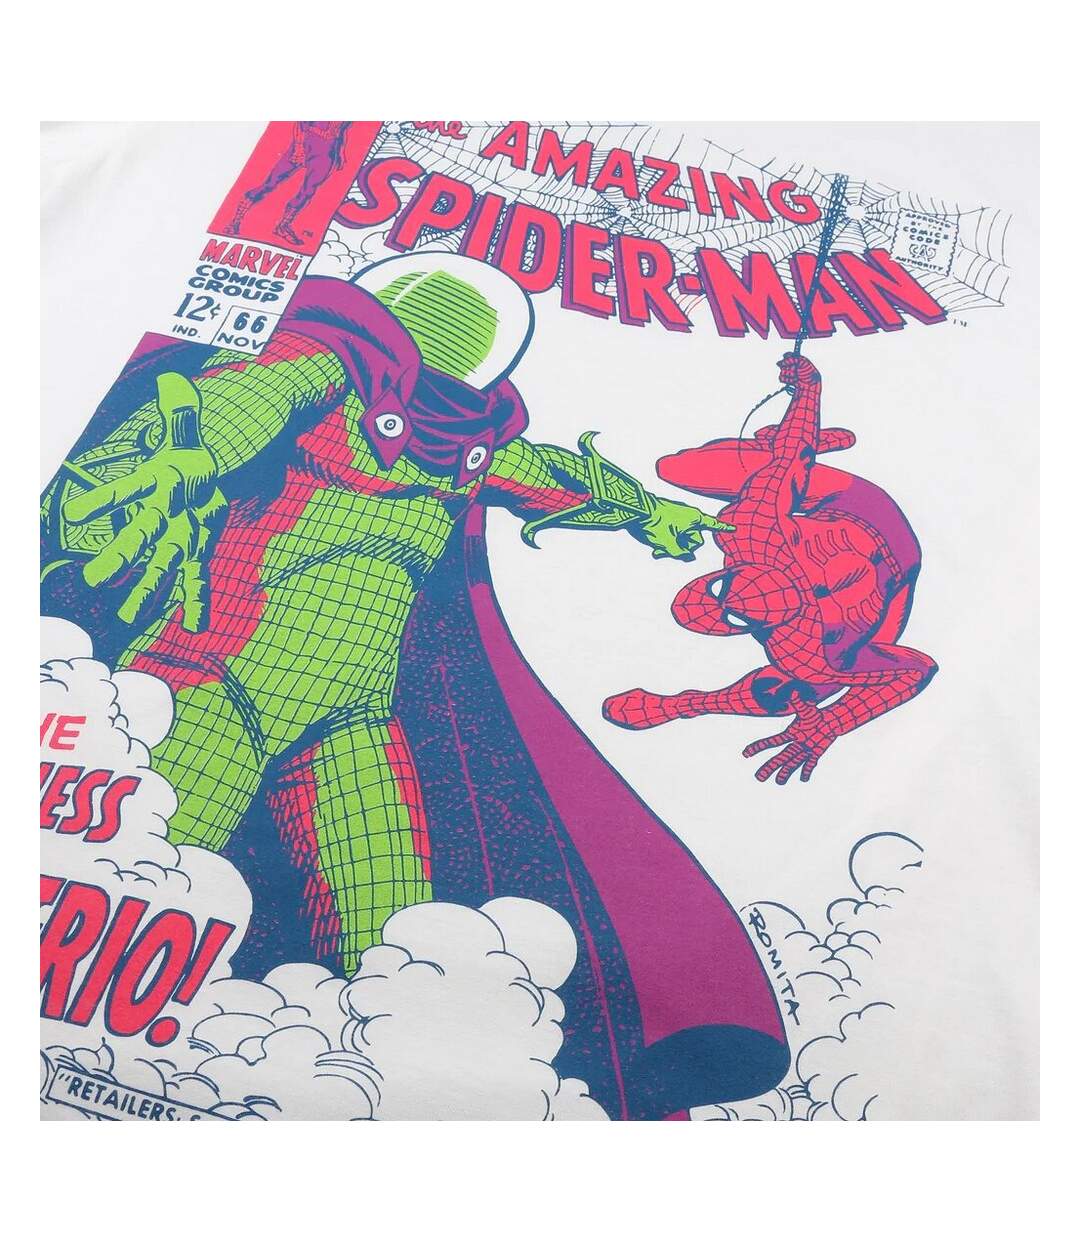 Marvel Comics T-shirt Mens Spiderman Madness (Blanc/Rose/Vert) - UTTV517